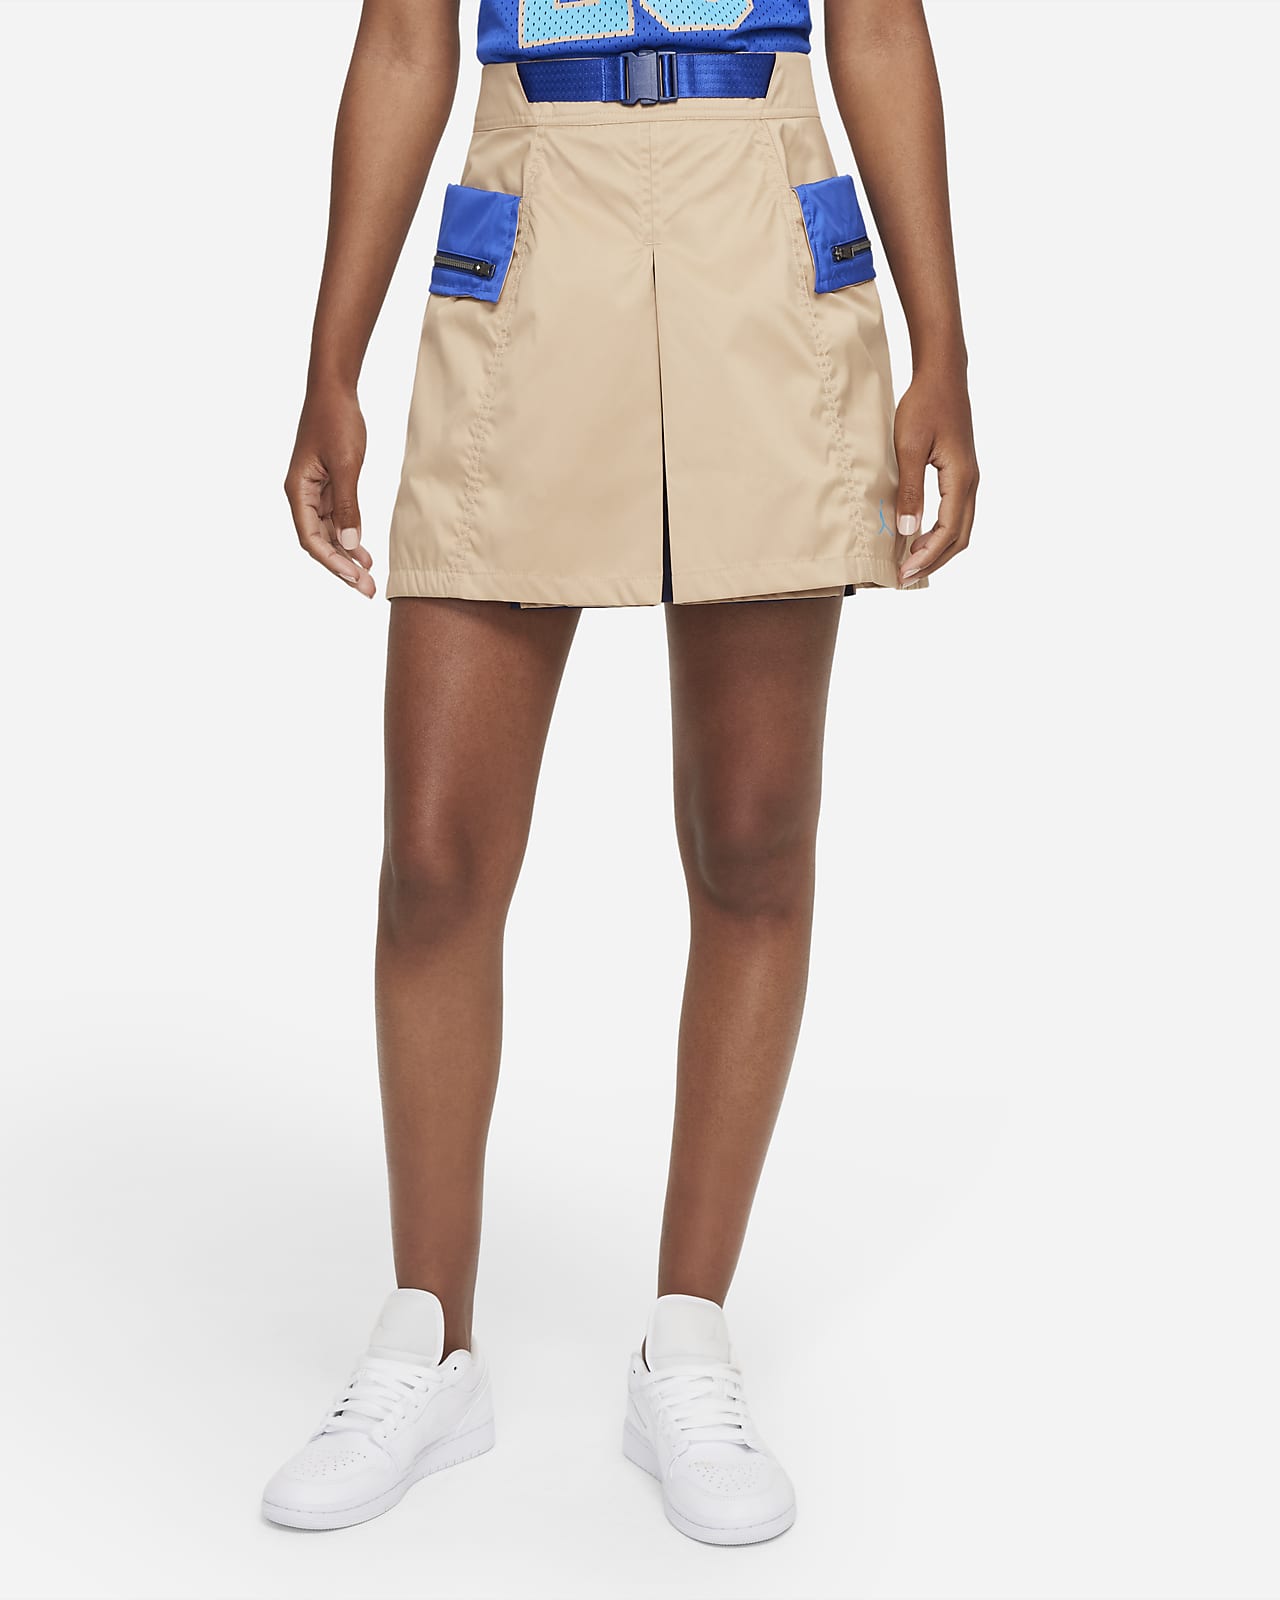 Jordan Next Utility Capsule Women's Skirt